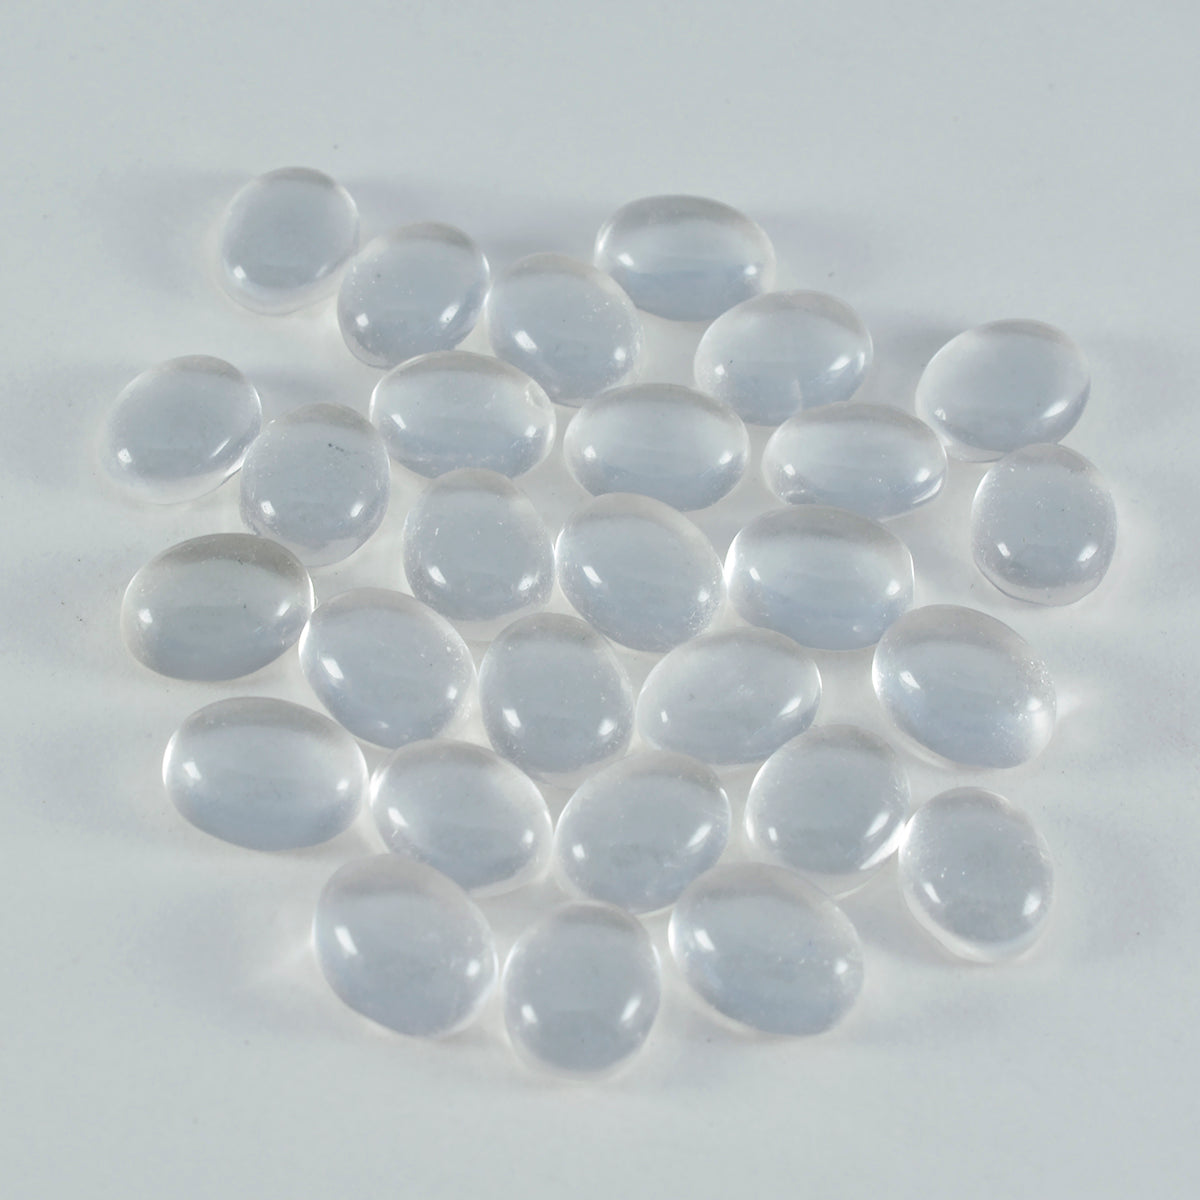 Riyogems 1PC White Crystal Quartz Cabochon 6x8 mm Oval Shape astonishing Quality Loose Gemstone